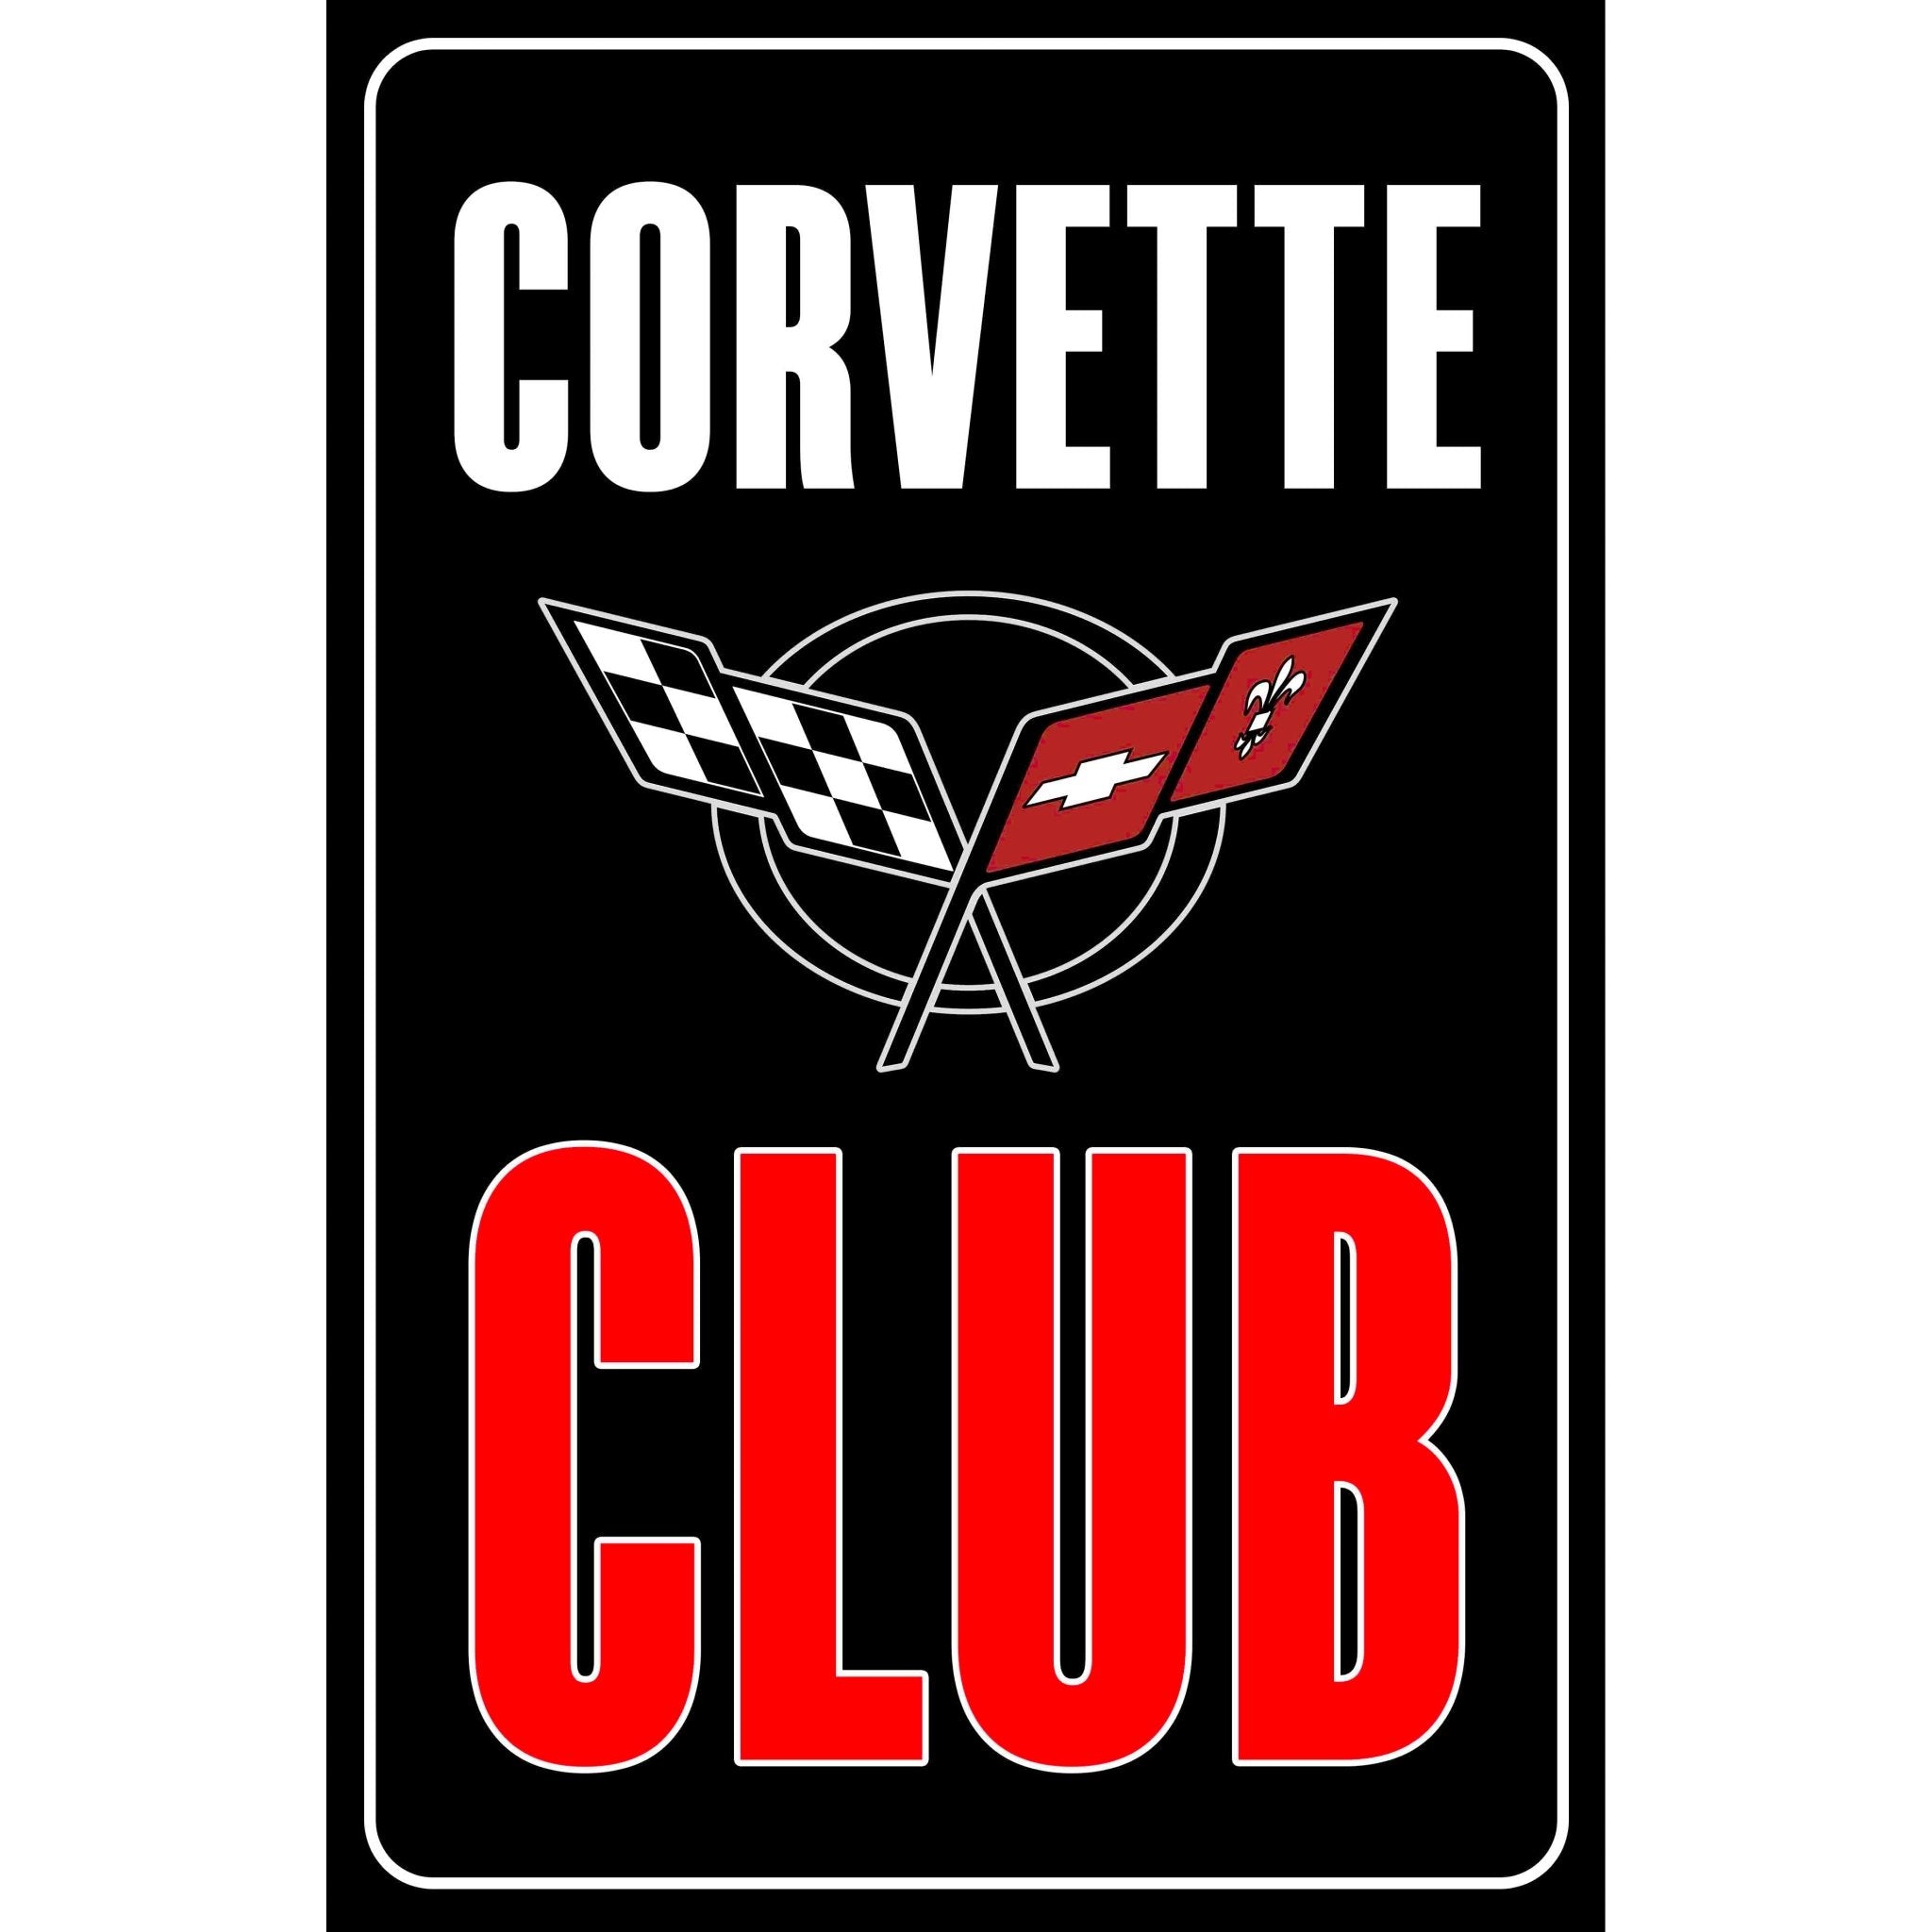 Corvette Club Metal Signs - 8 Different Logos - Vette1 - C5 Signs